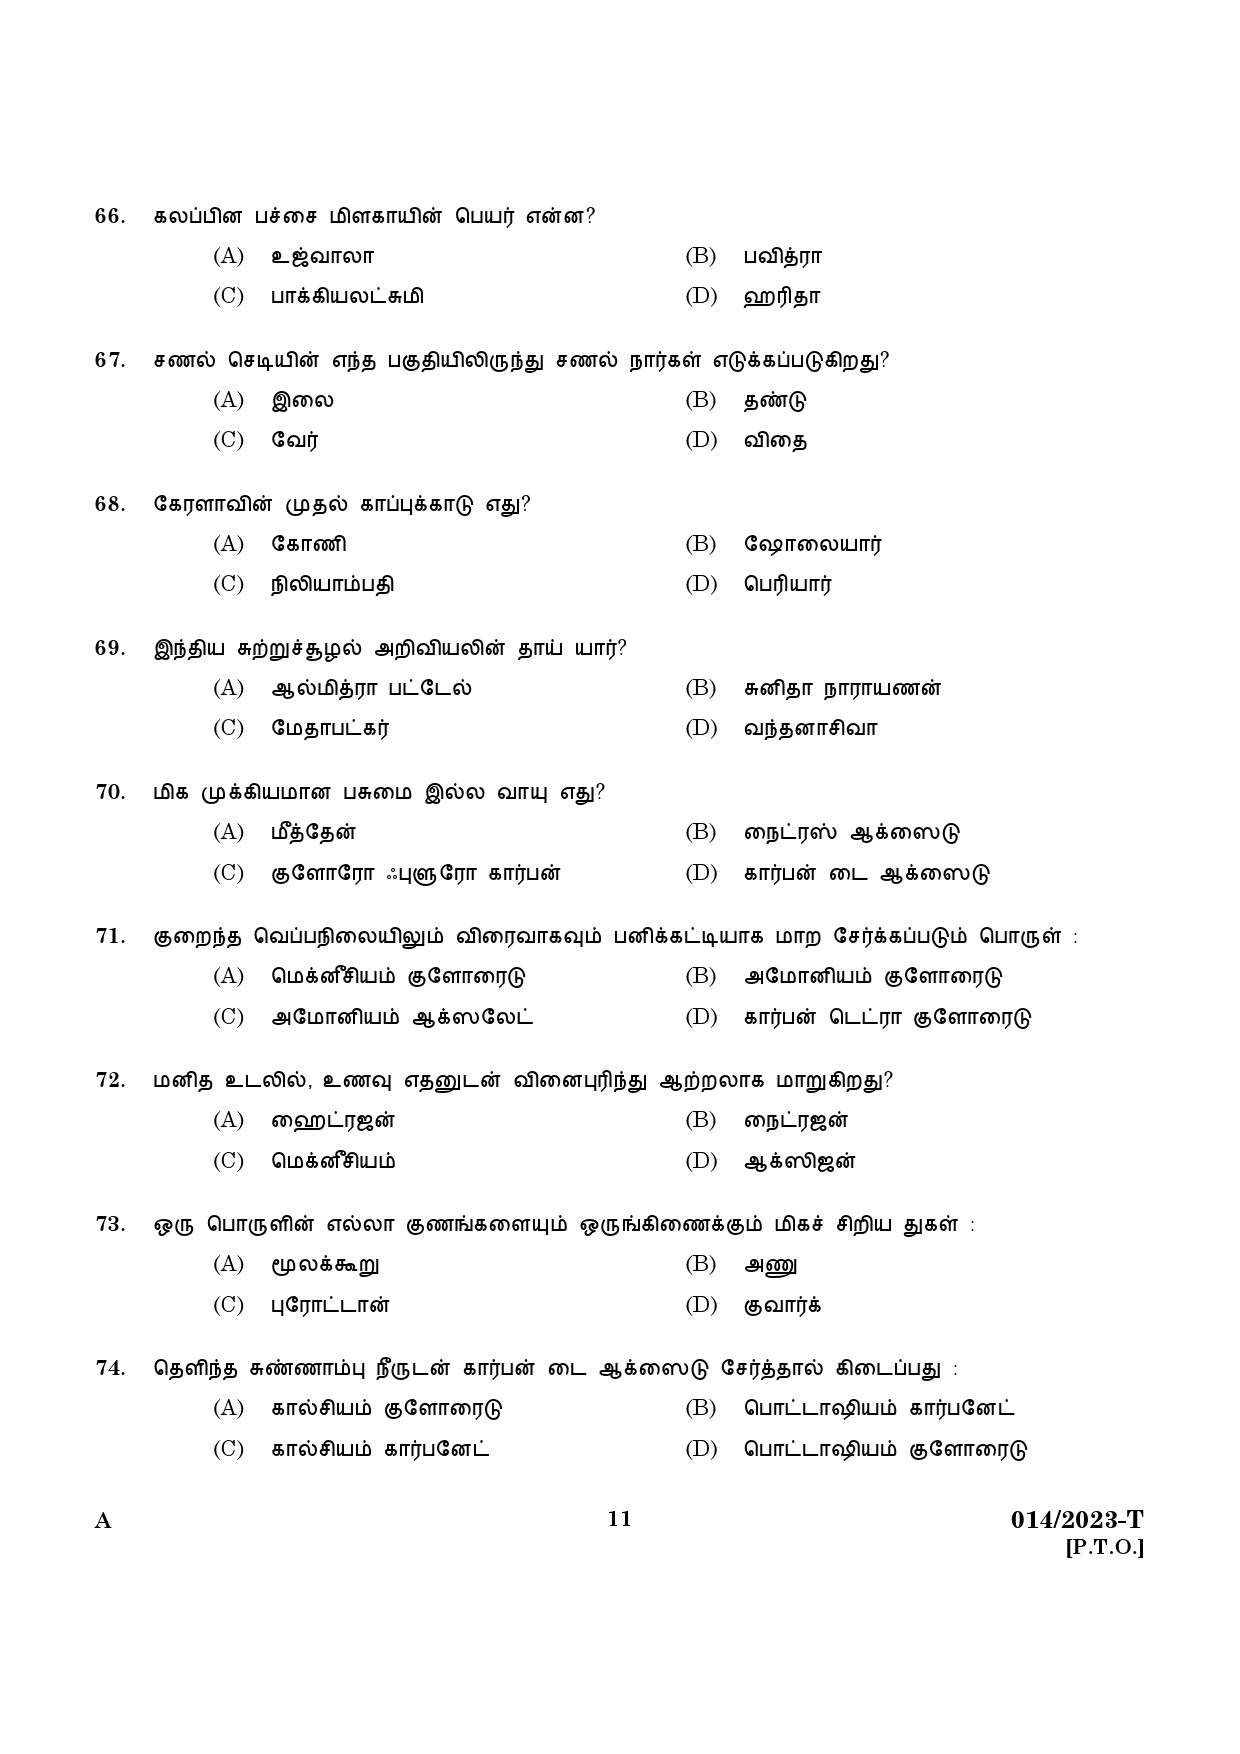 KPSC LGS Preliminary Examination Tamil Exam 2023 Code 0142023 9